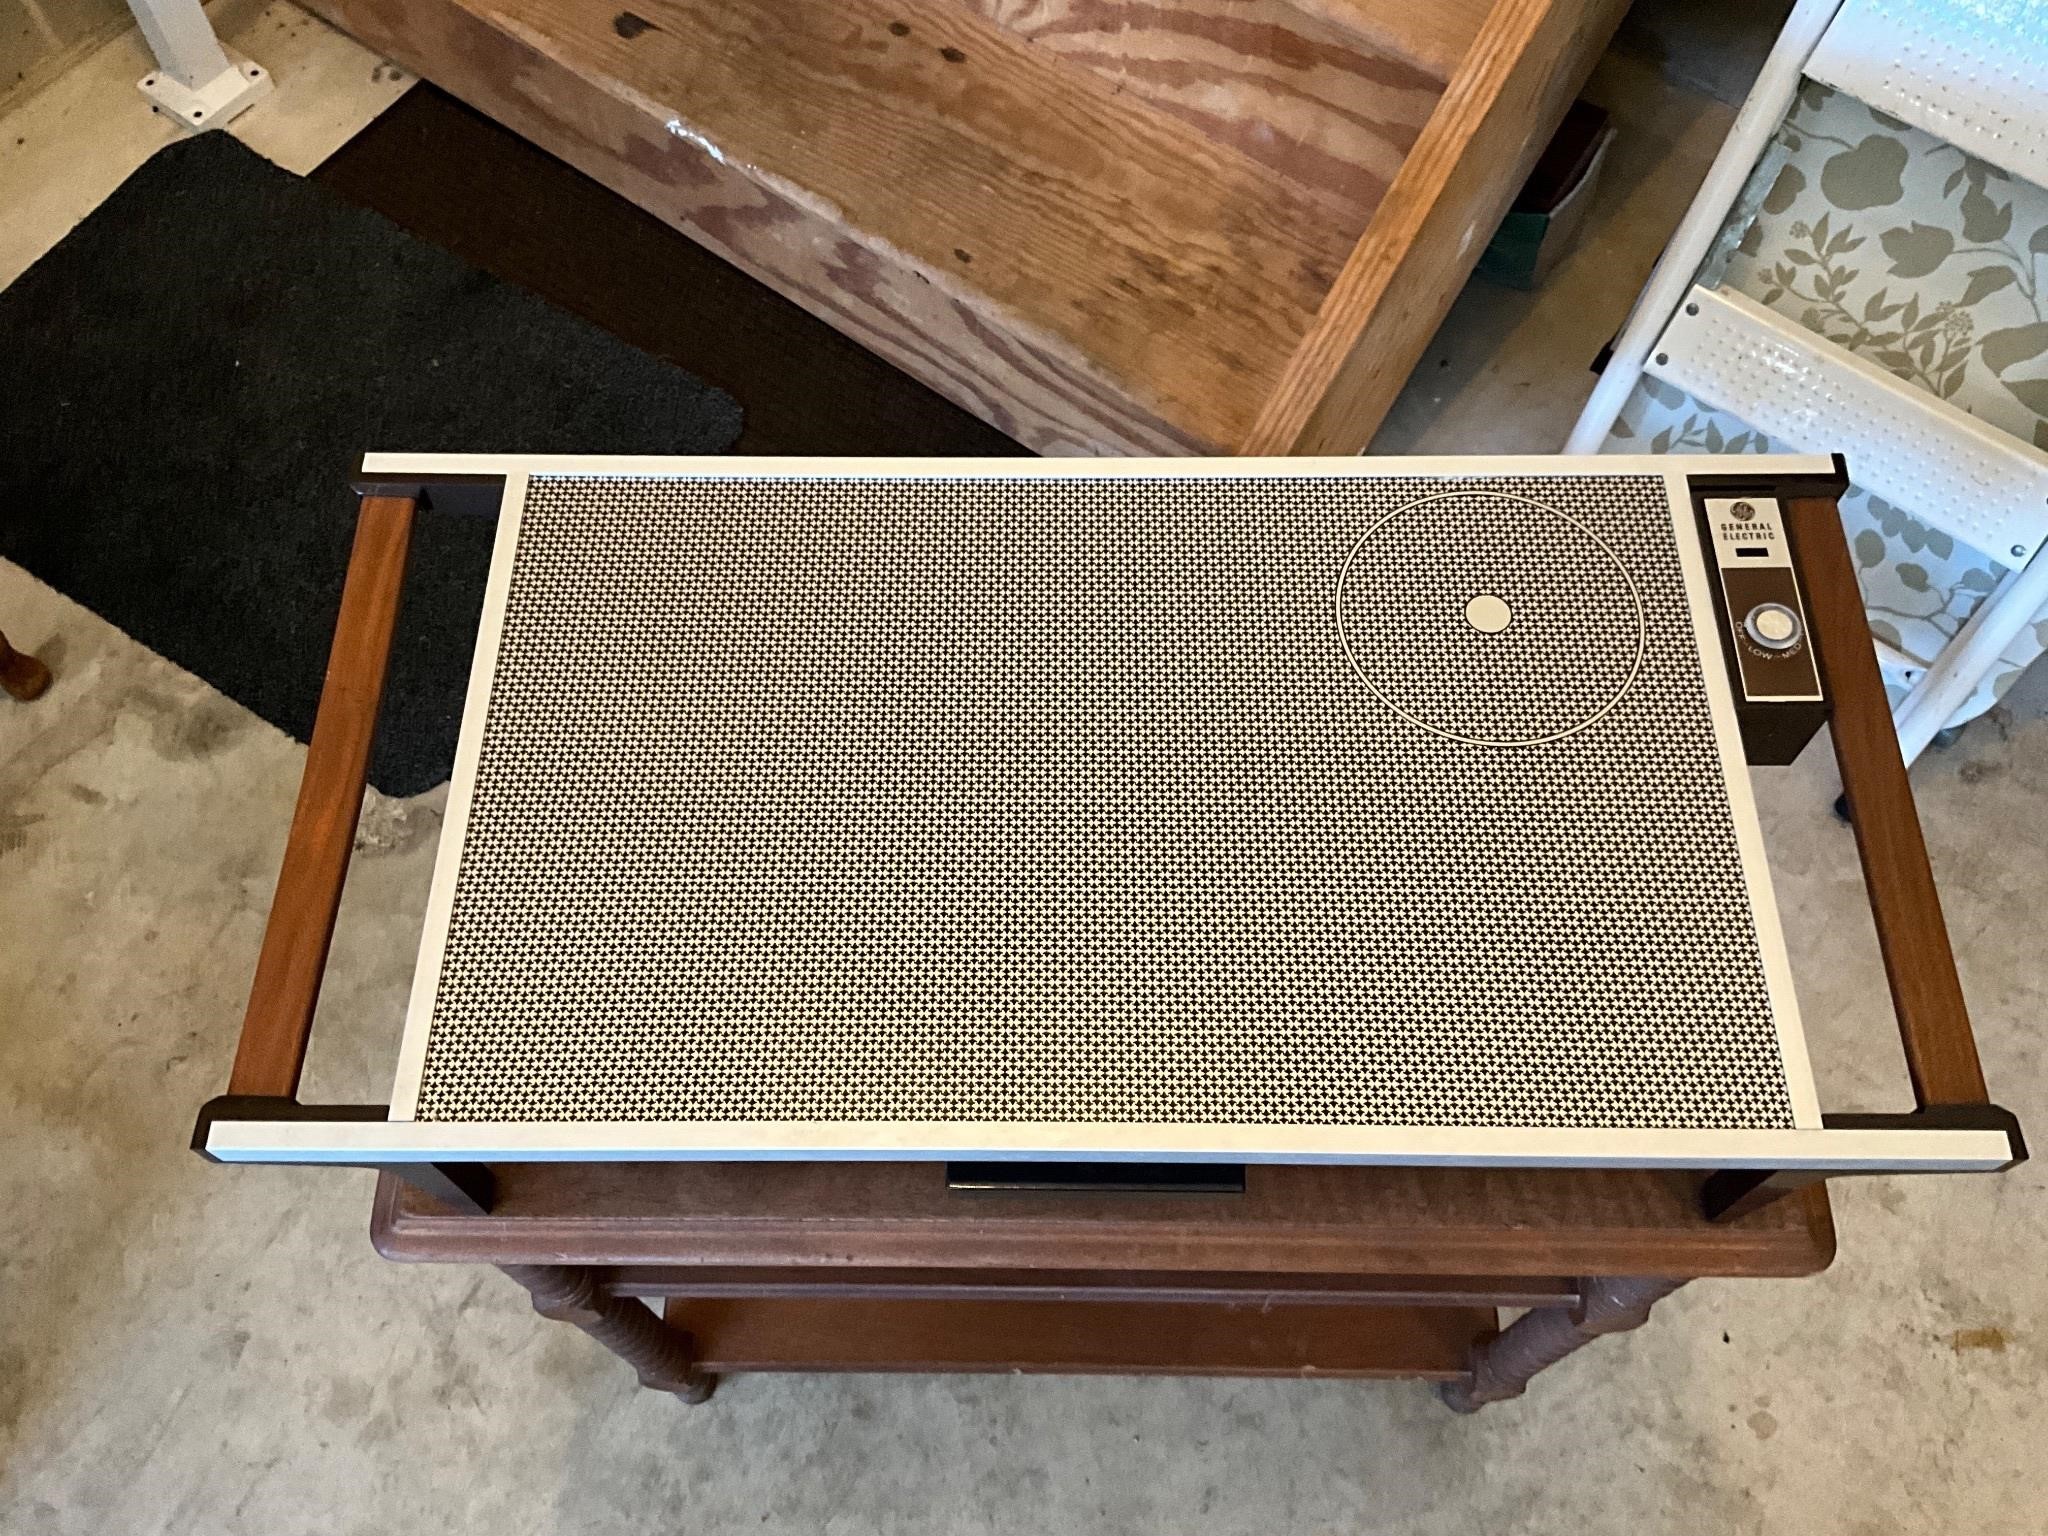 Vintage GE Portable Electric Cooktop